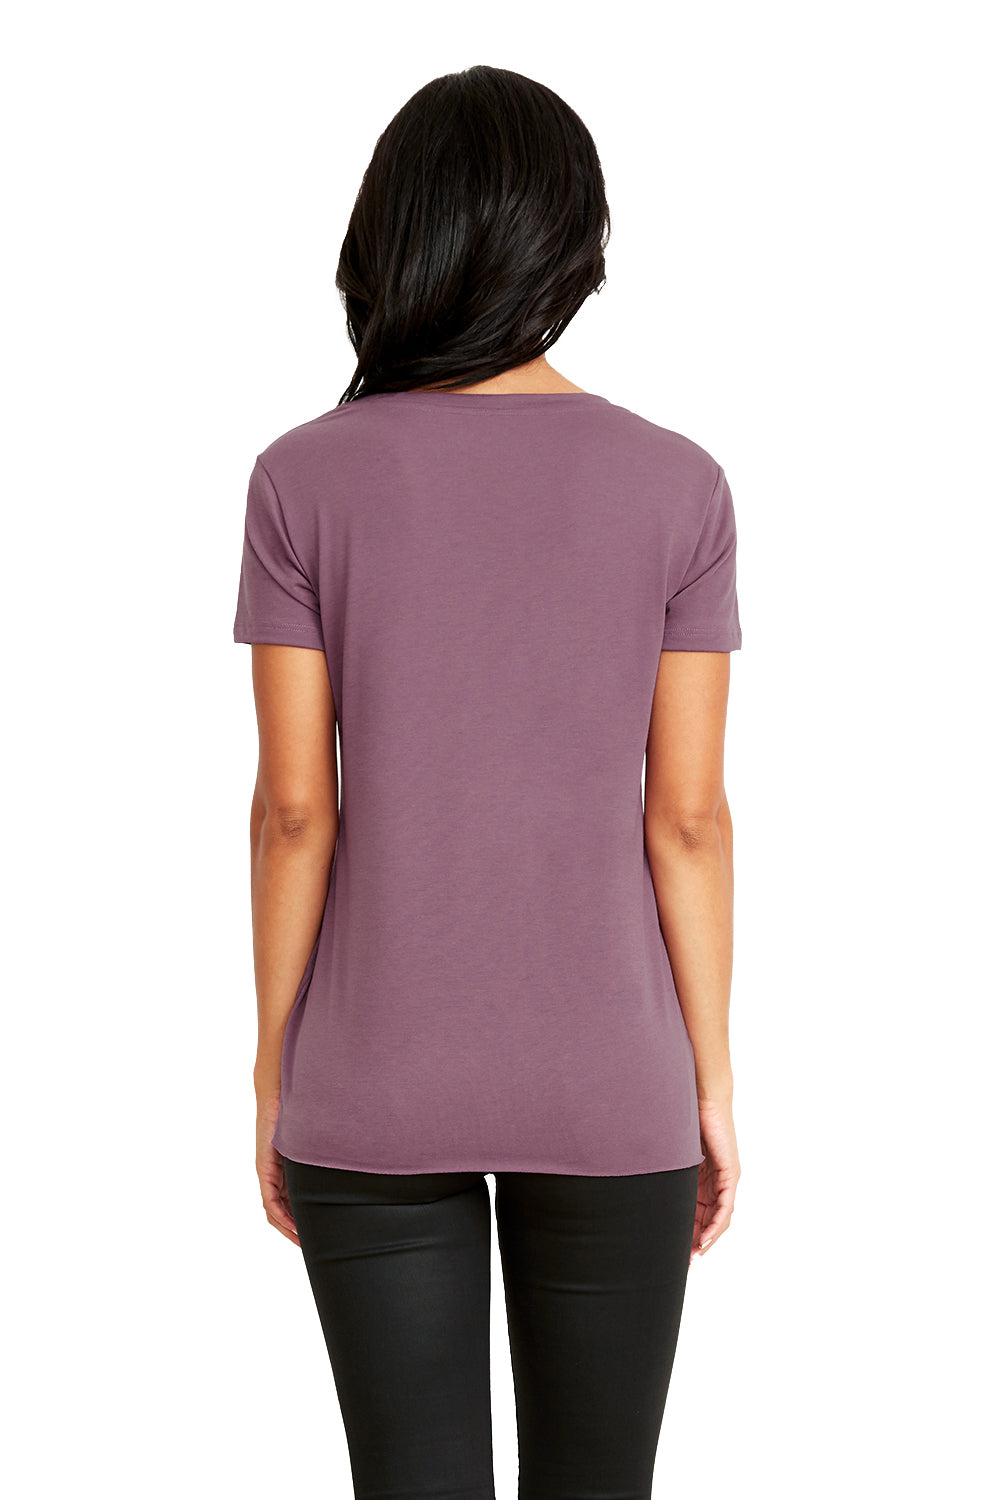 Next Level 5030 Womens Festival Short Sleeve Crewneck T-Shirt Shiraz Purple Back